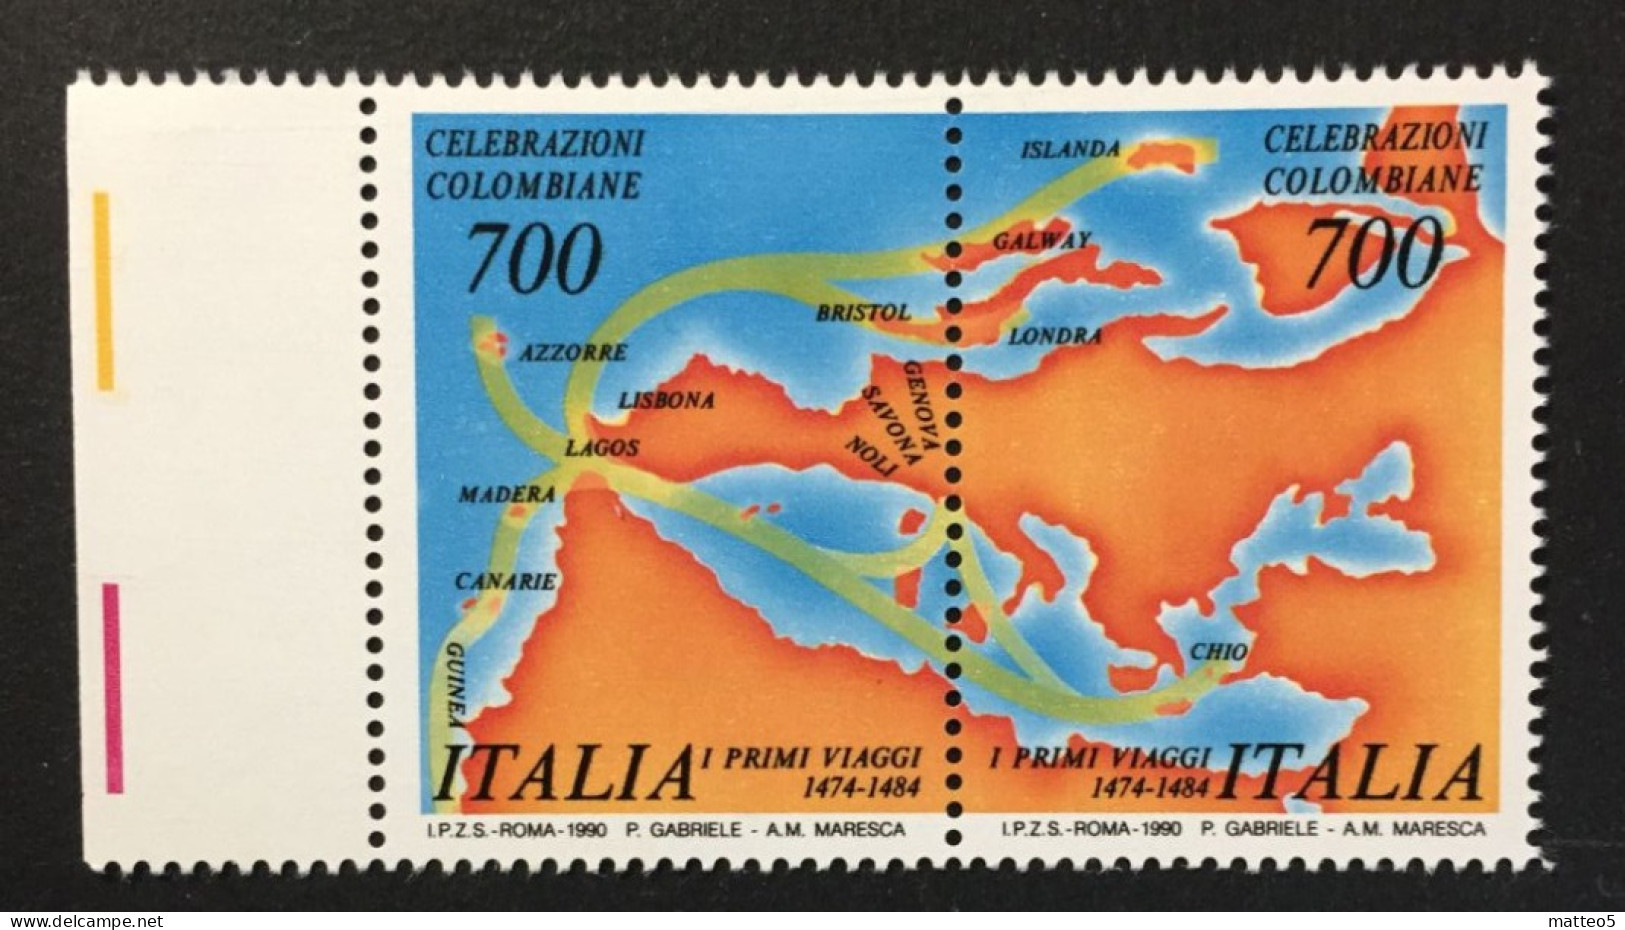 1990 - Italia - Celebrazioni Colombiane - Lire 700 - 1981-90: Mint/hinged